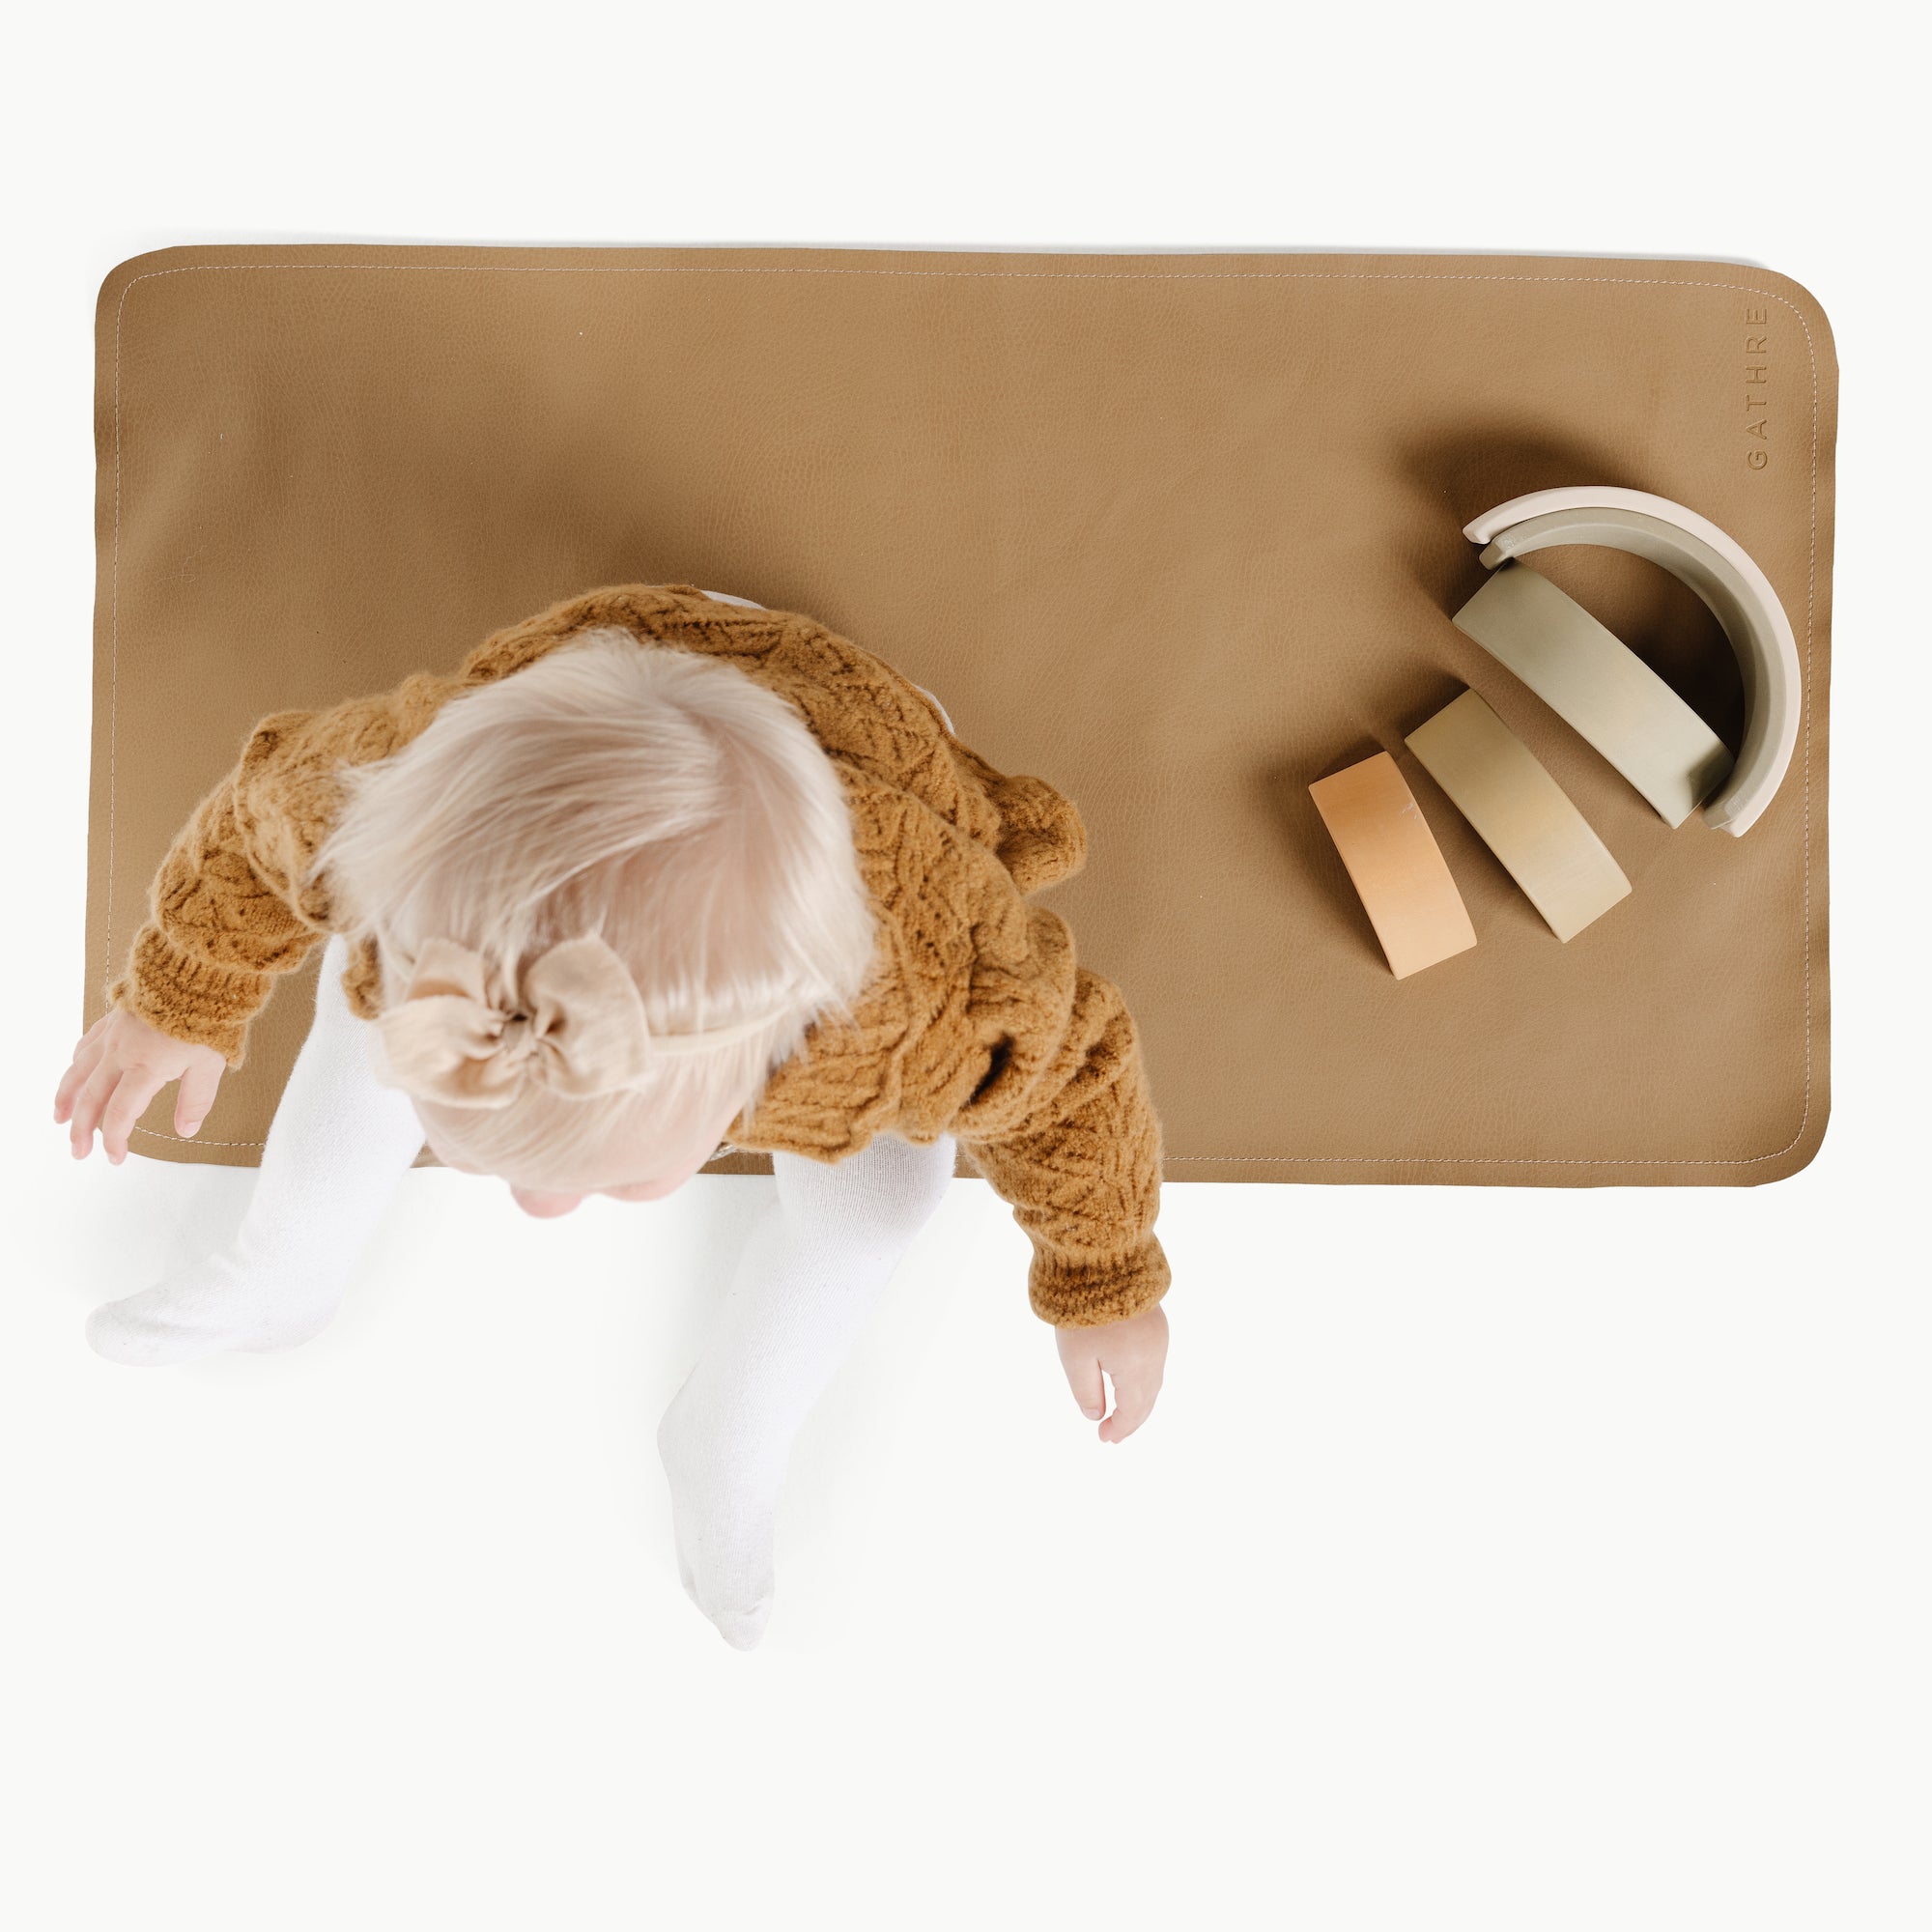 Ochre (on sale)@Overhead of a baby on the Micro+ Ochre Mat